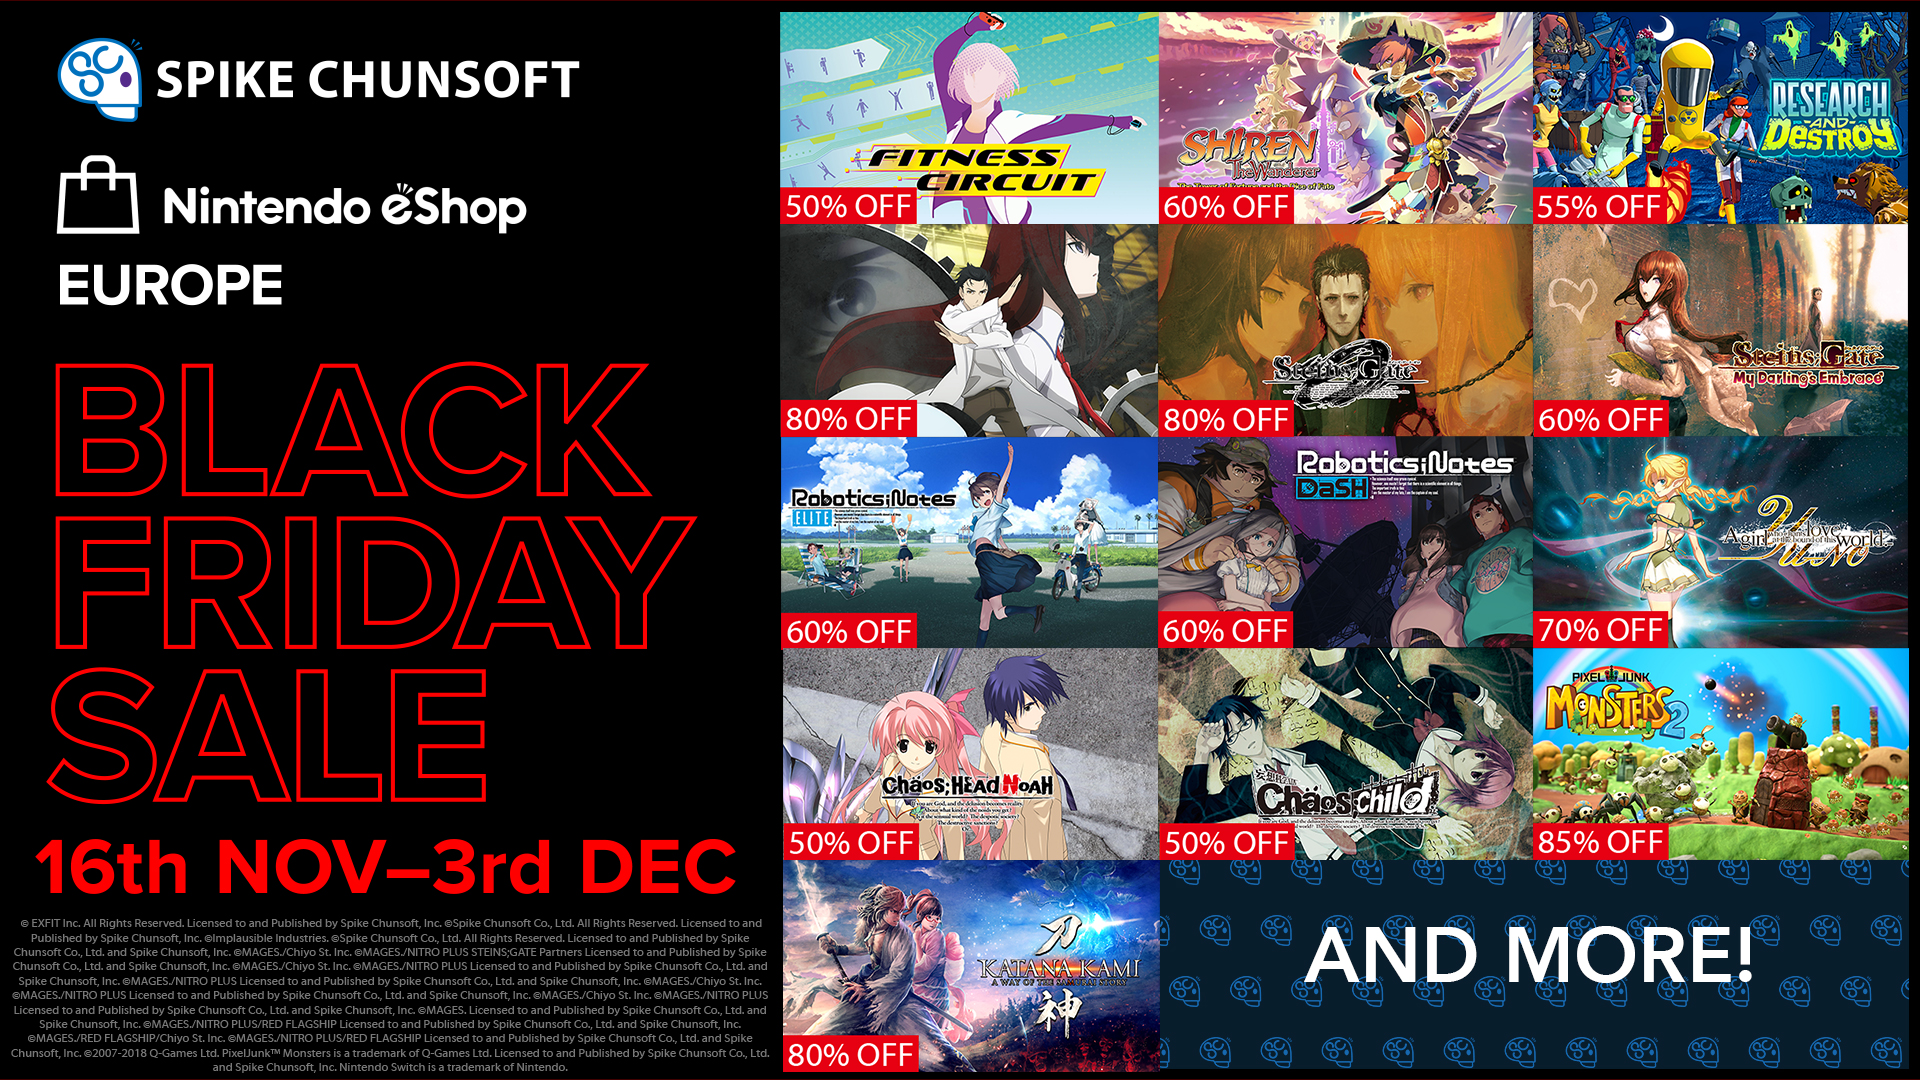 Nintendo eShop Black Friday sale now on! 